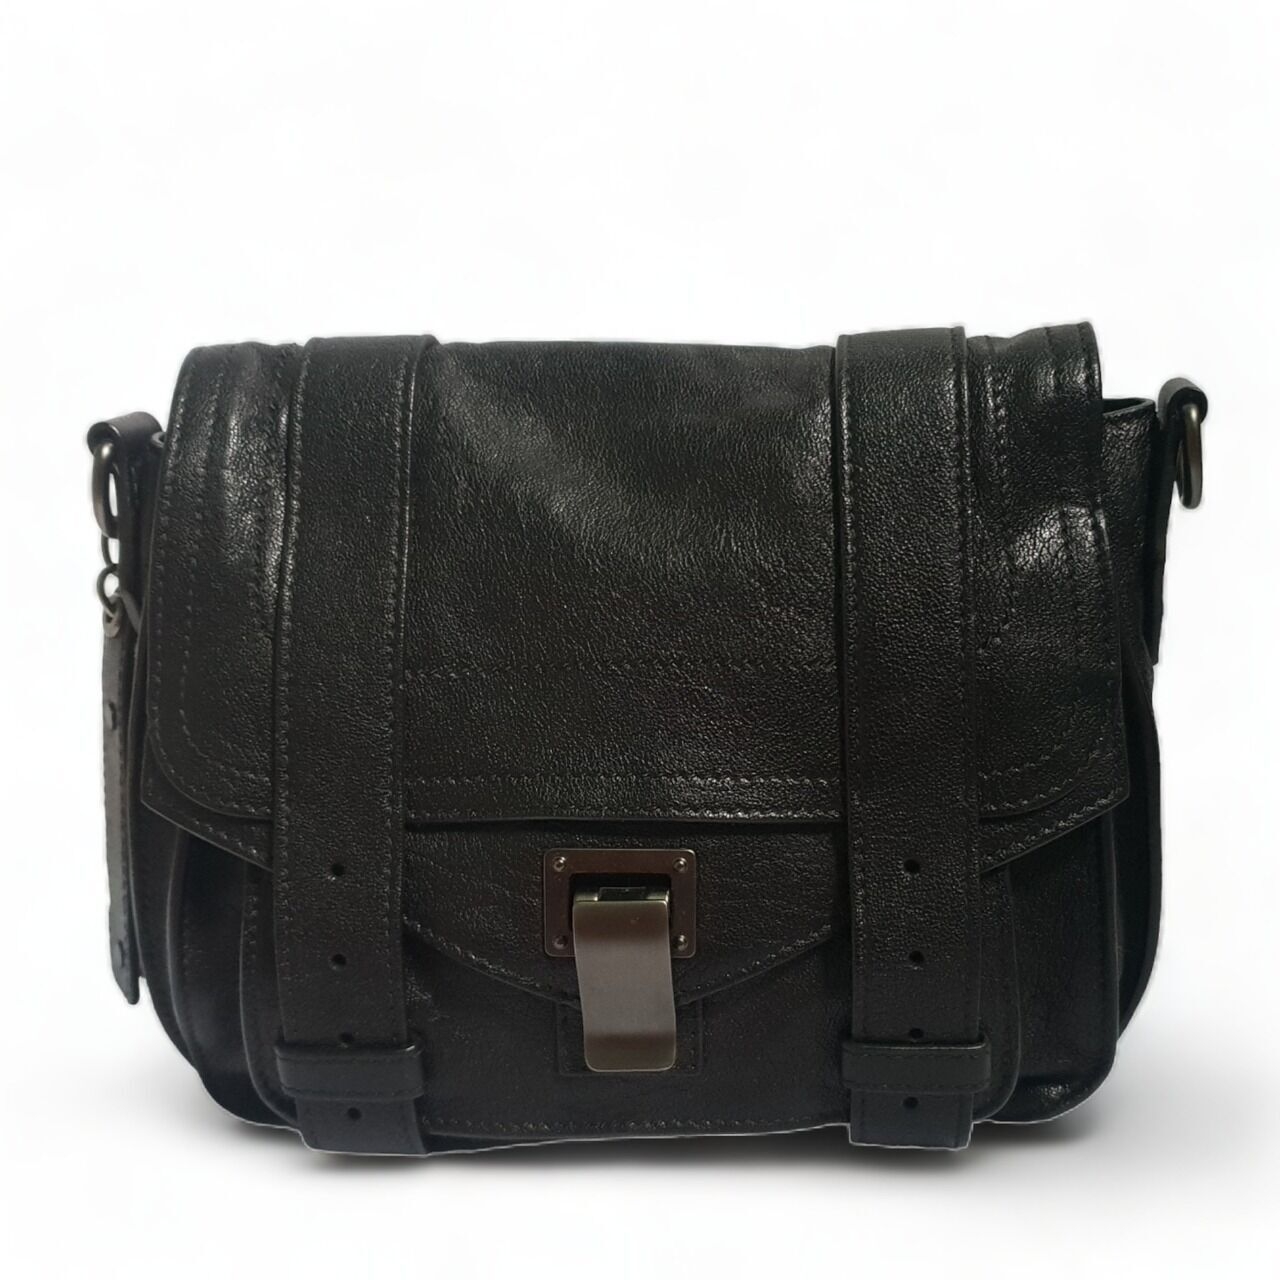 Proenza Schouler PS1 Black Leather Sling Bag